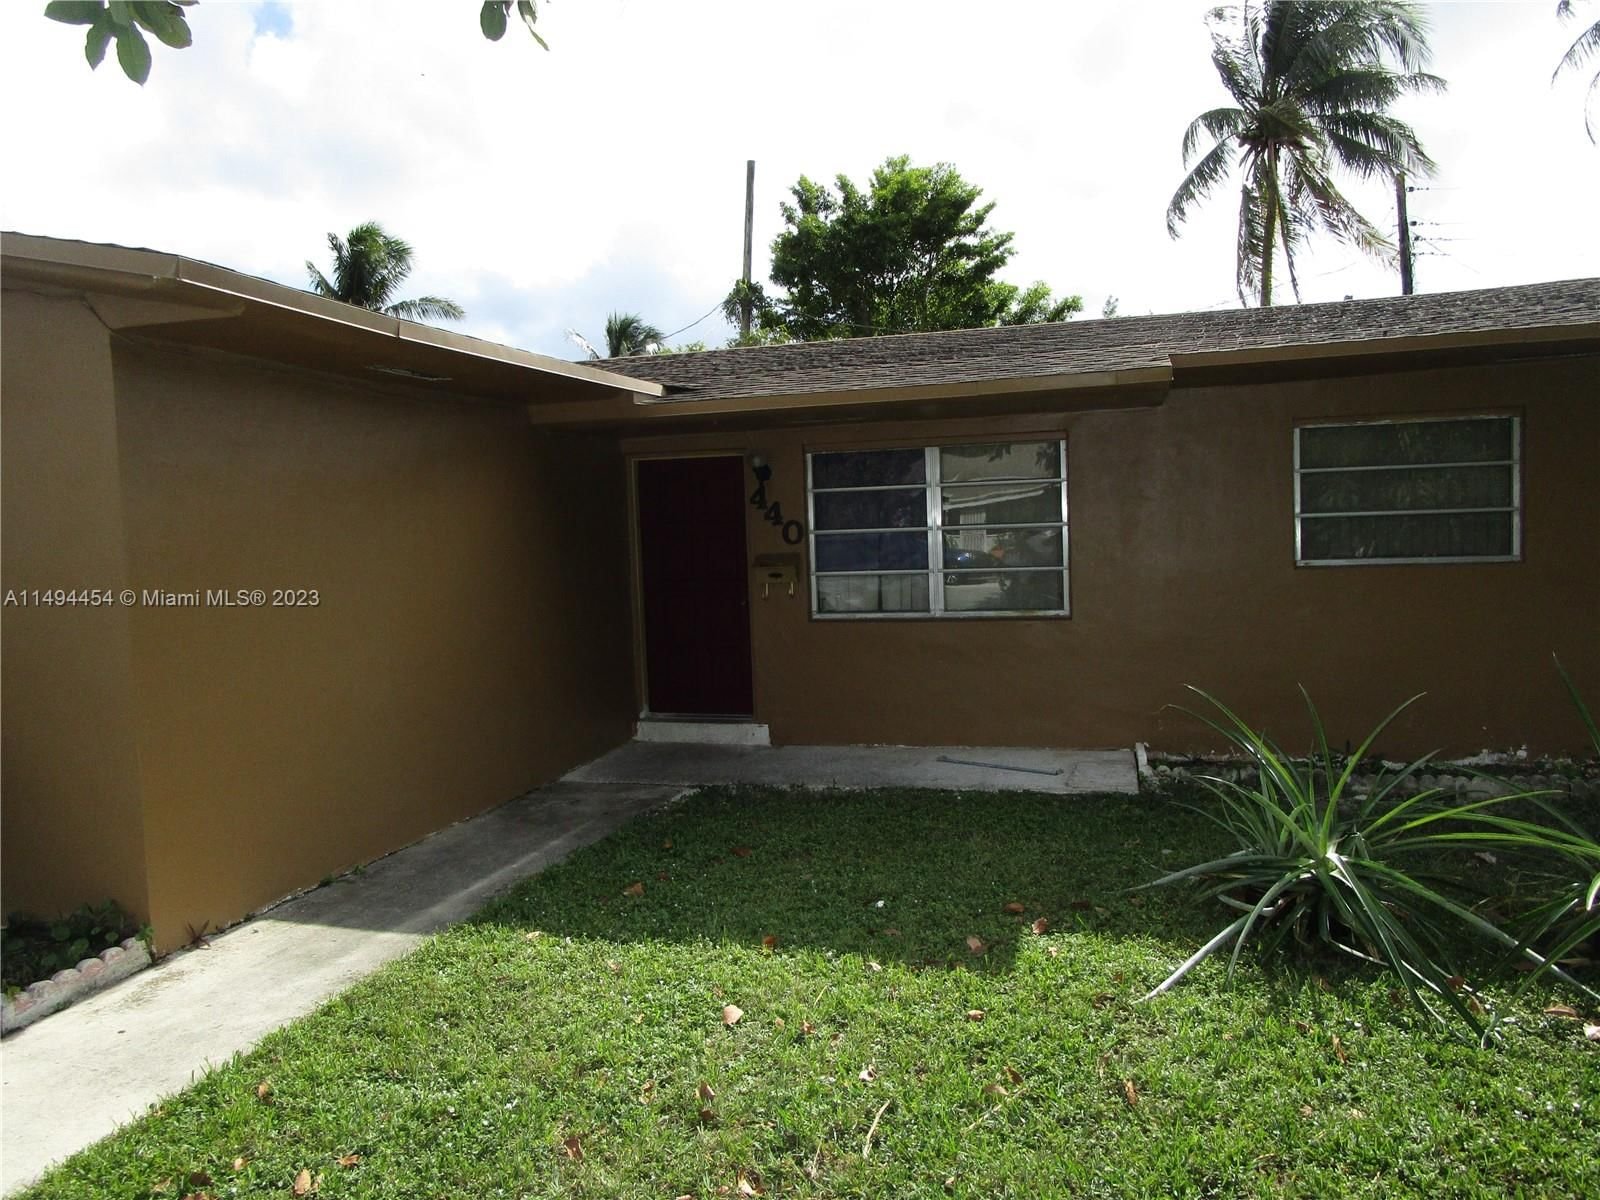 Real estate property located at 440 174th St, Miami-Dade County, SEABOARD PARK, North Miami Beach, FL